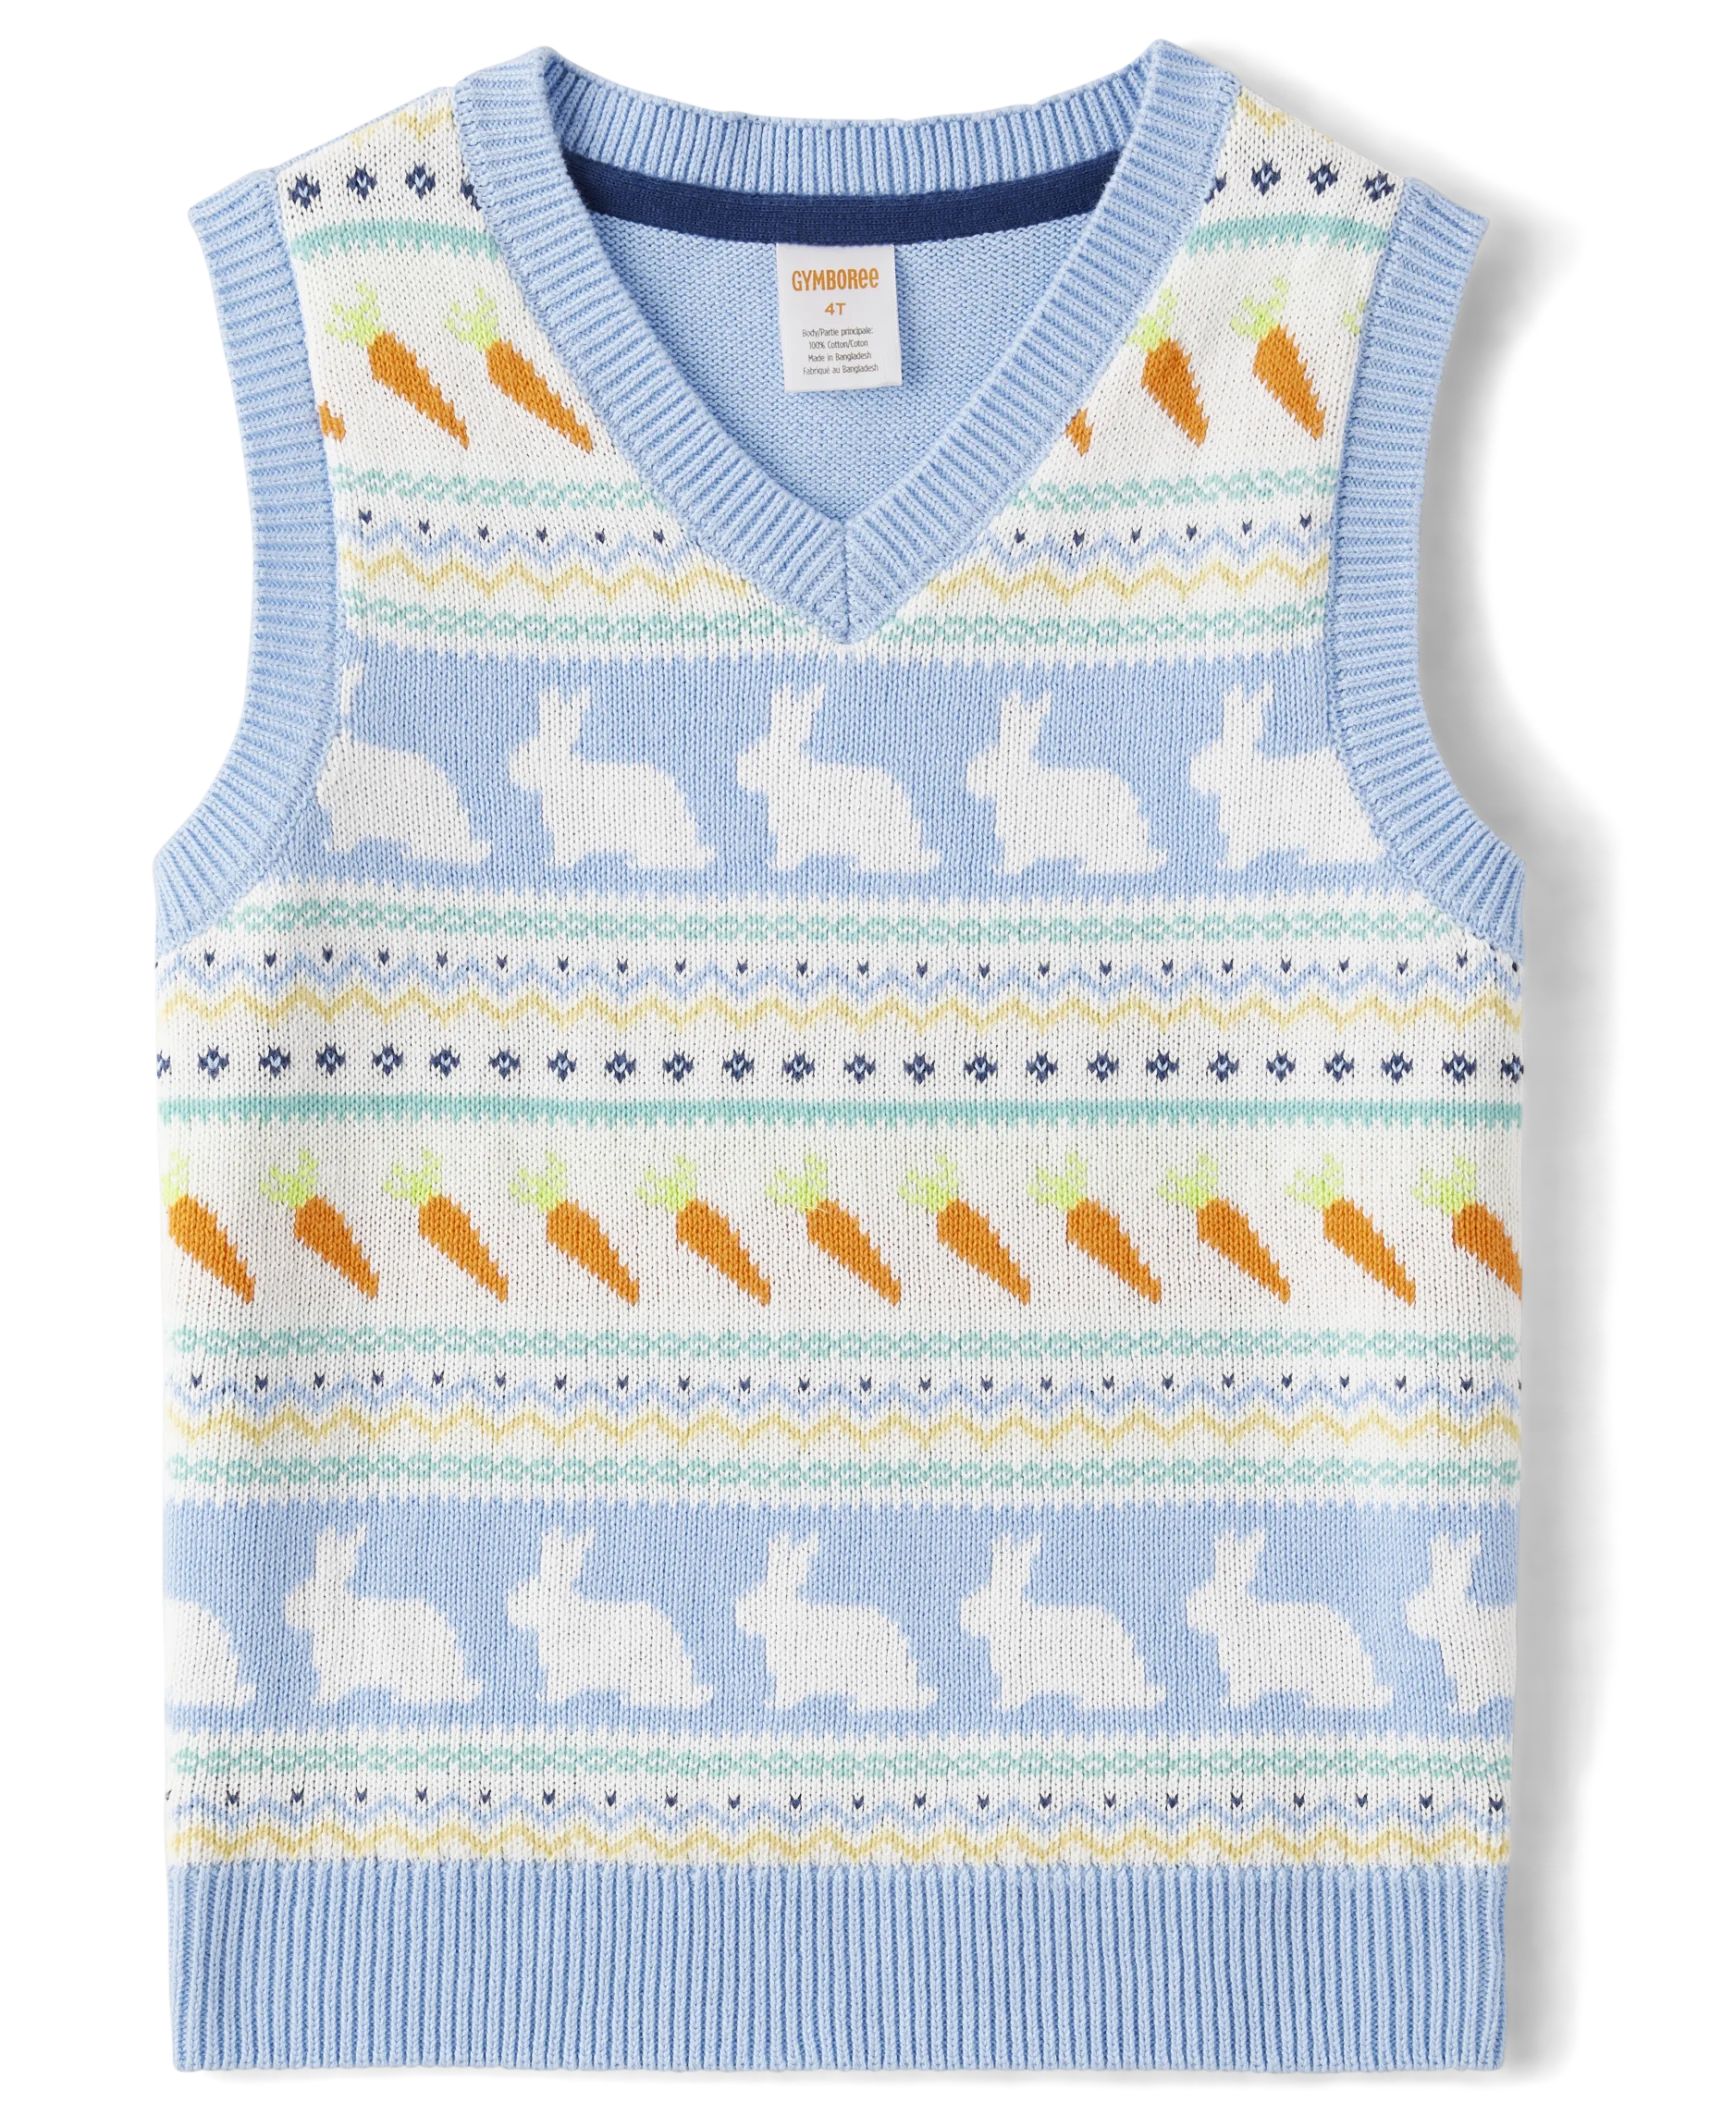 Boys Intarsia Bunny Fairisle Sweater Vest - Spring Celebrations - simplywht | The Children's Place